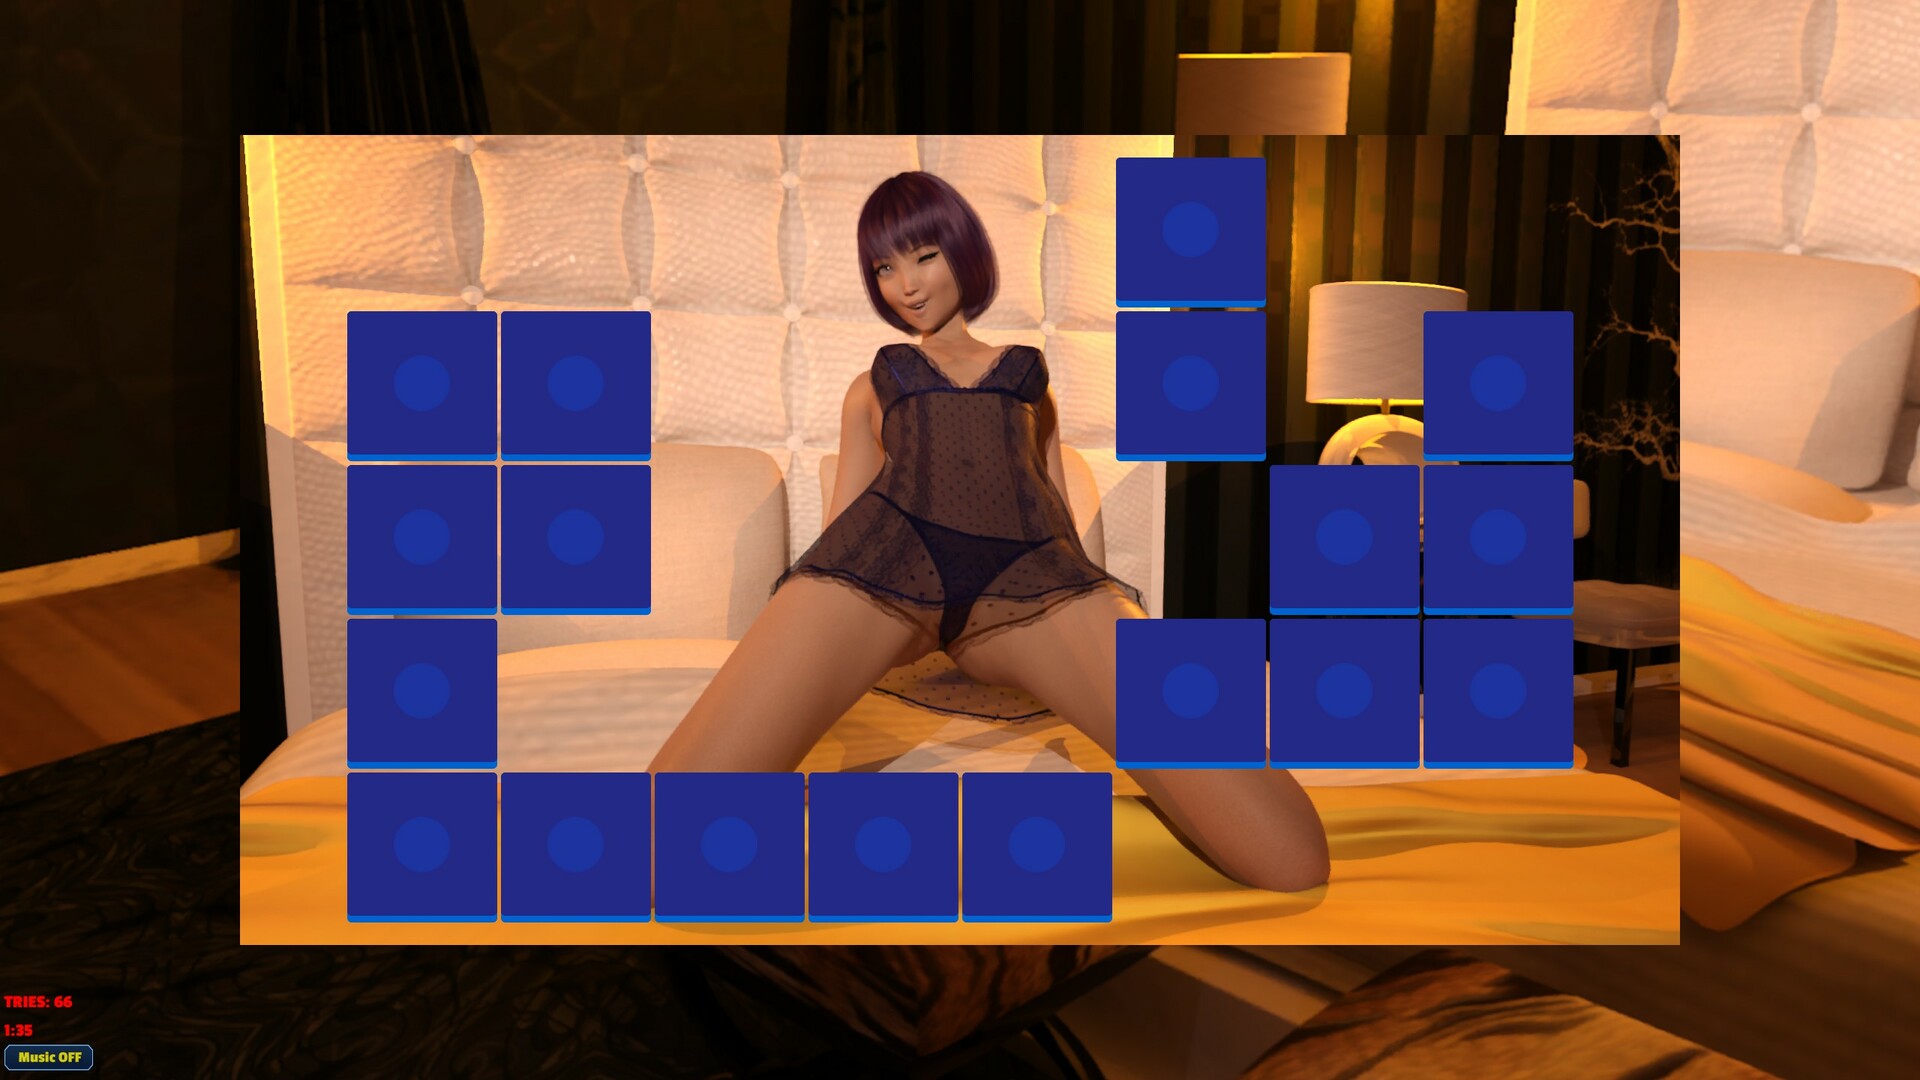 Sexy Memory Puzzle - Kawaii Steam CD Key